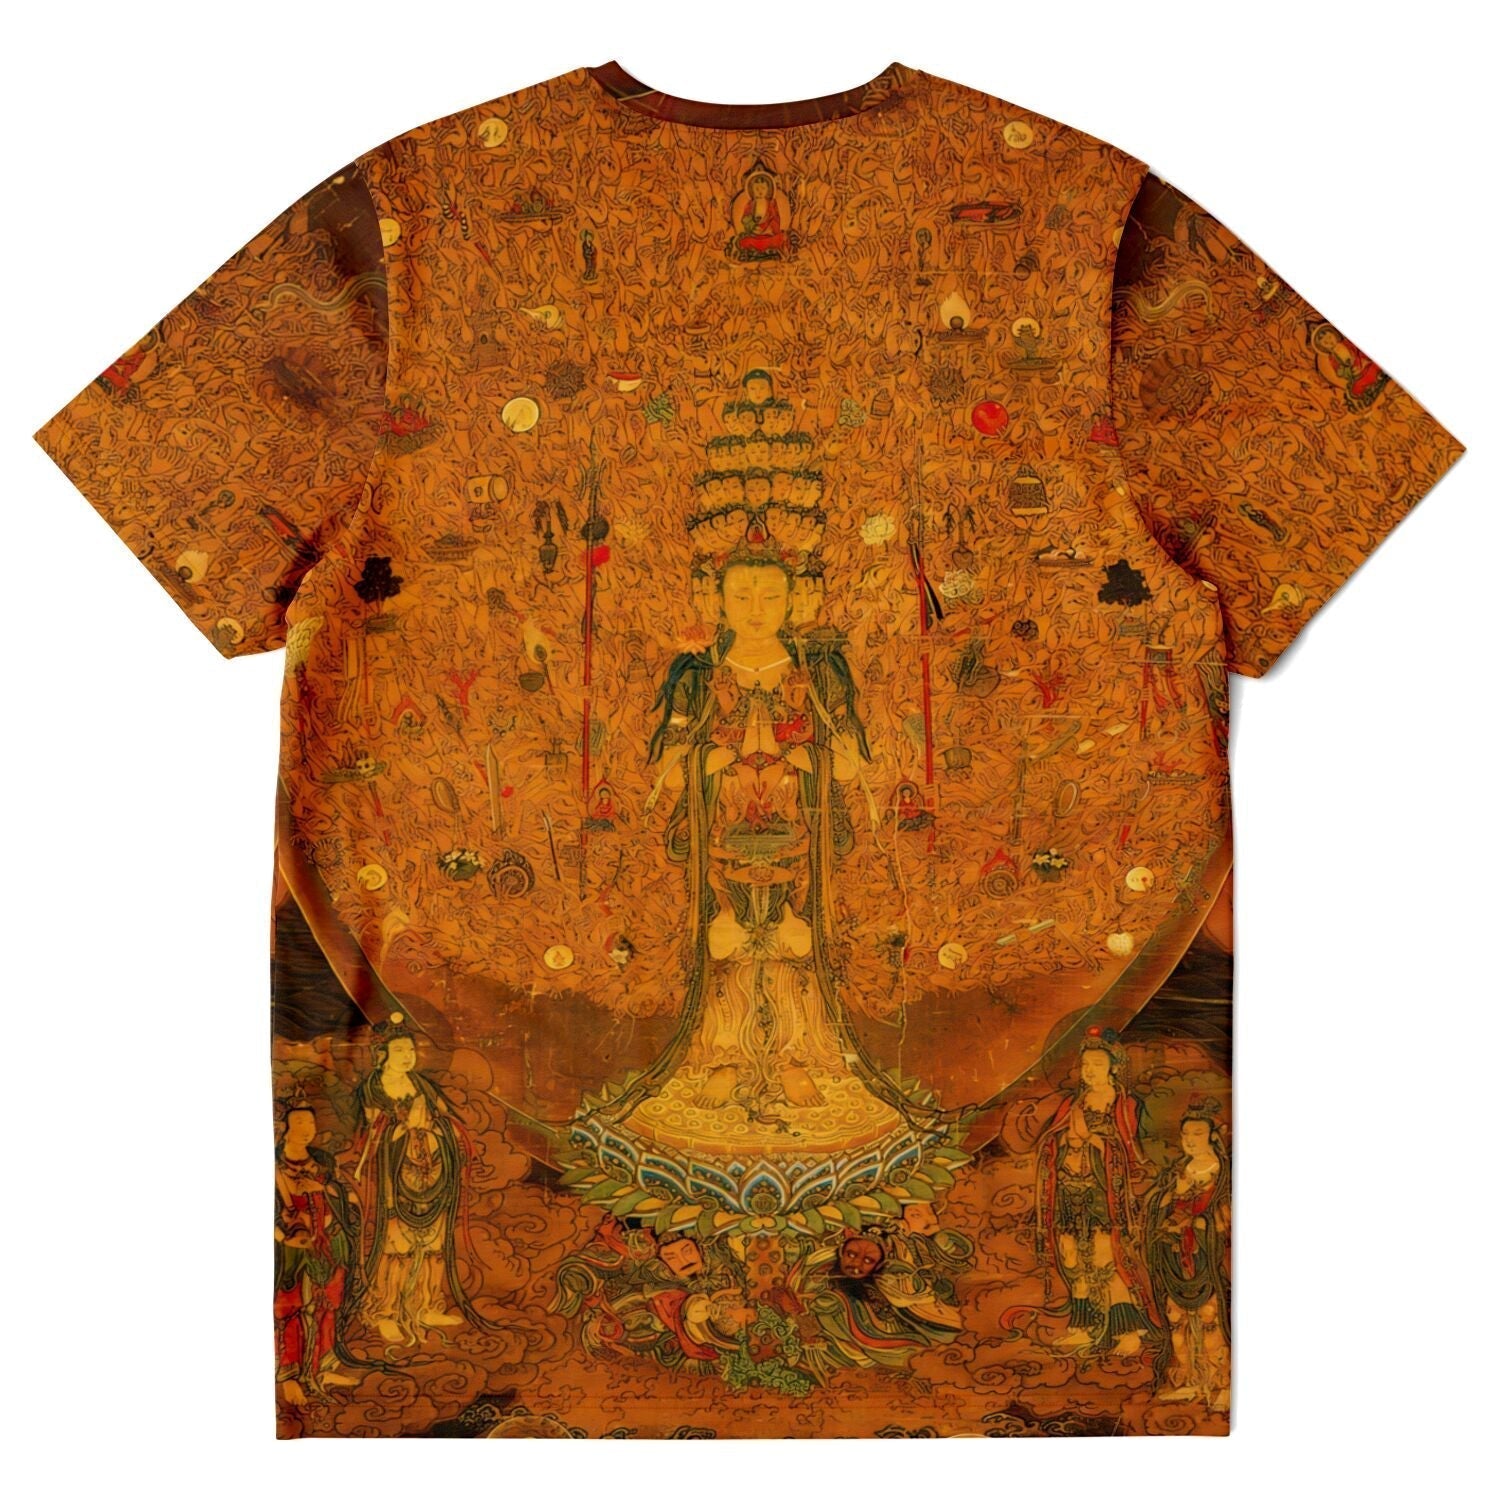 T-shirt XS Guan Yin of a Thousand Arms and Eyes | Avalokiteshvara, Kannon | Buddhist Deity Graphic Art T-Shirt